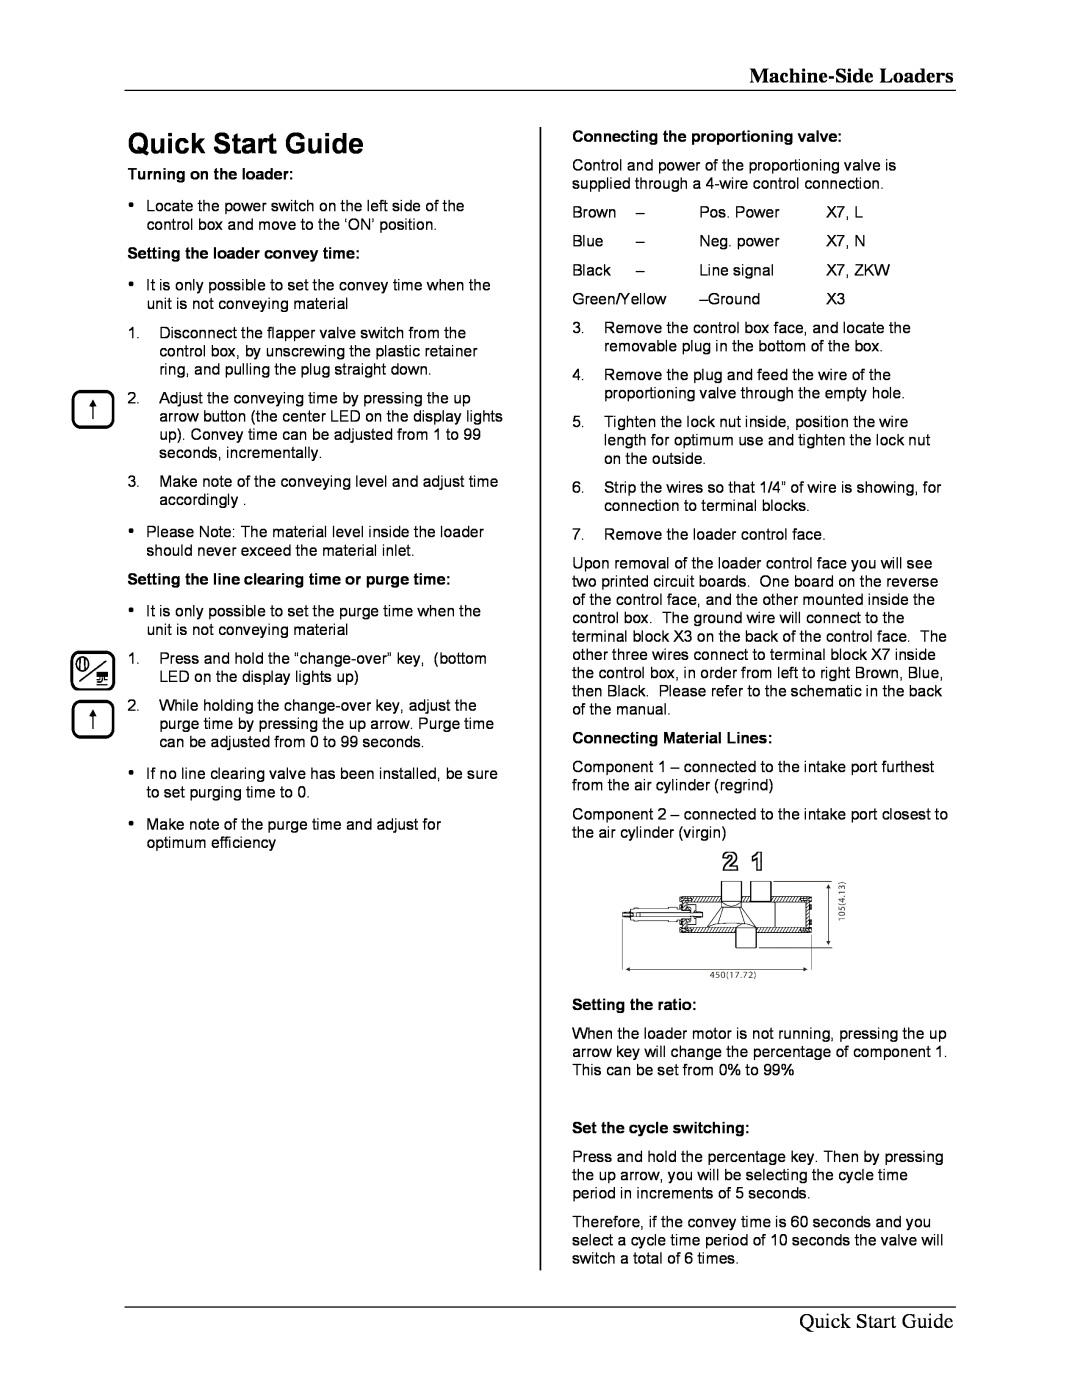 Sterling sse manual Quick Start Guide, Machine-SideLoaders 